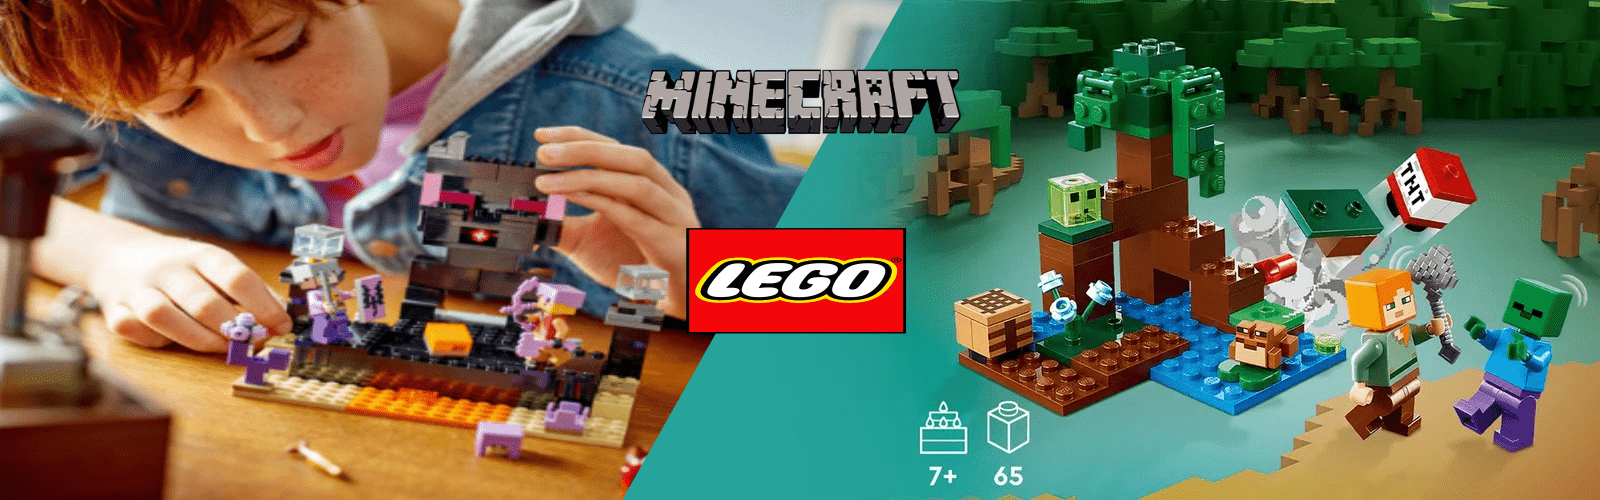 Image Lego Minecraft Site Web Tipirate